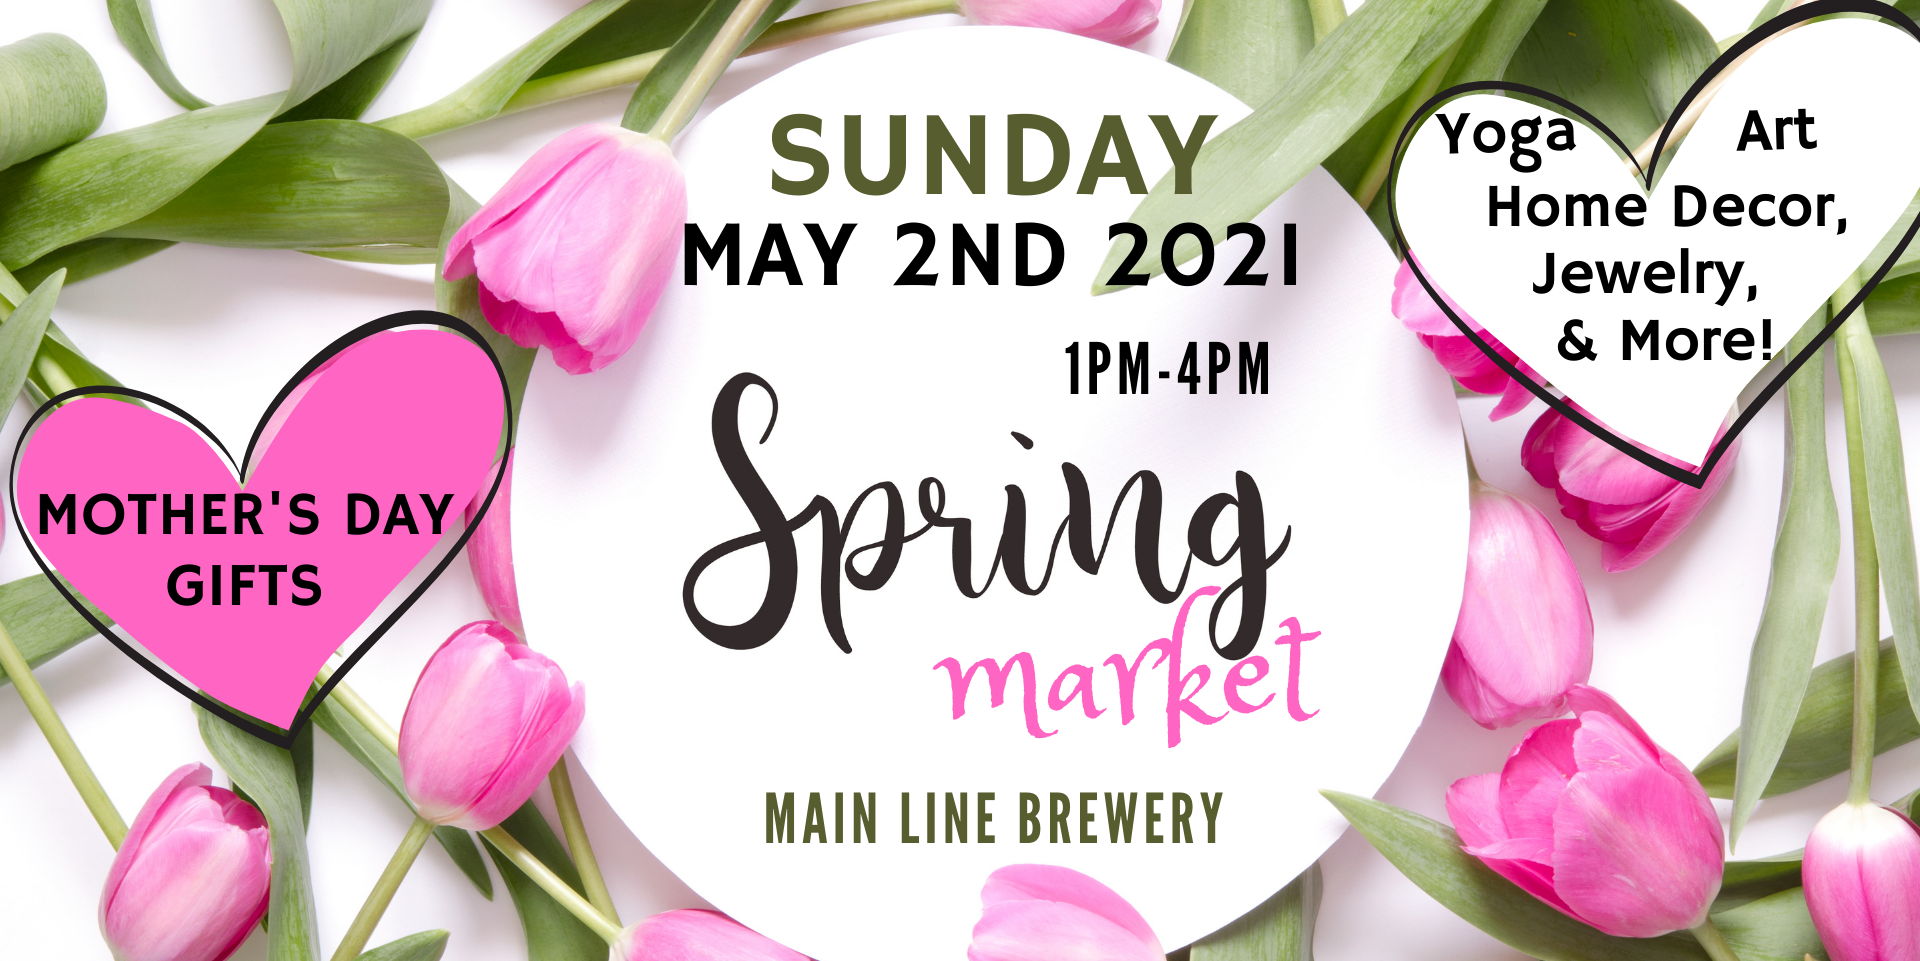 Spring Artisan Market at Main Line Brewery promotional image